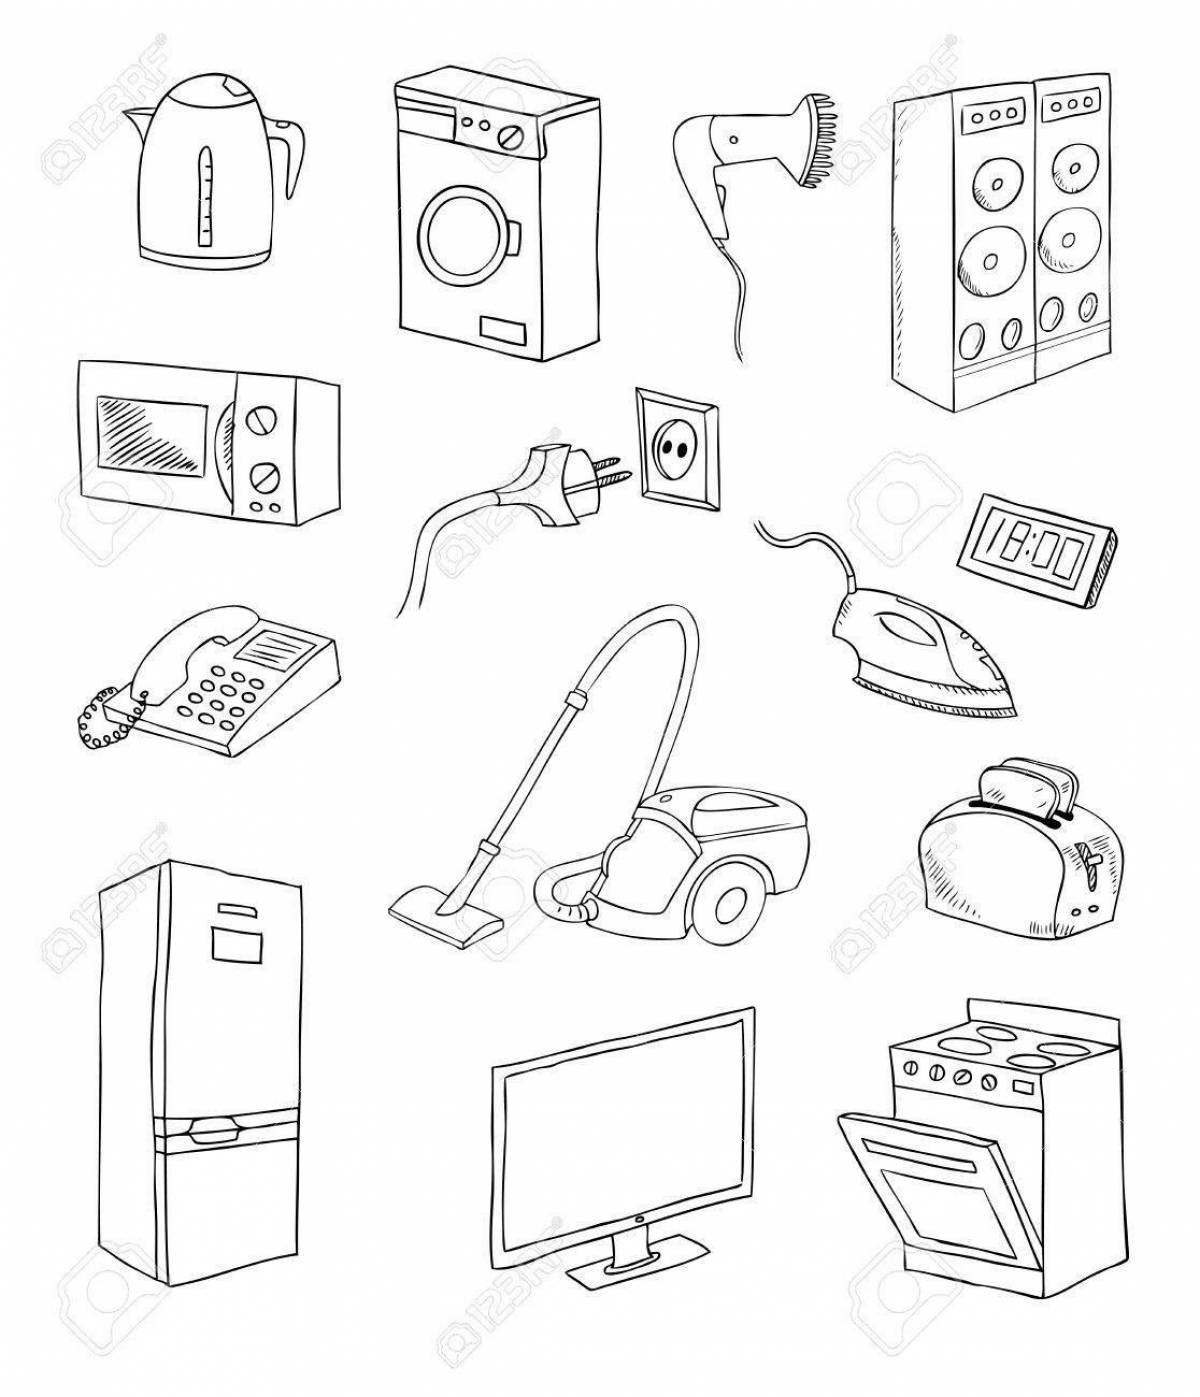 Electrical appliances #5